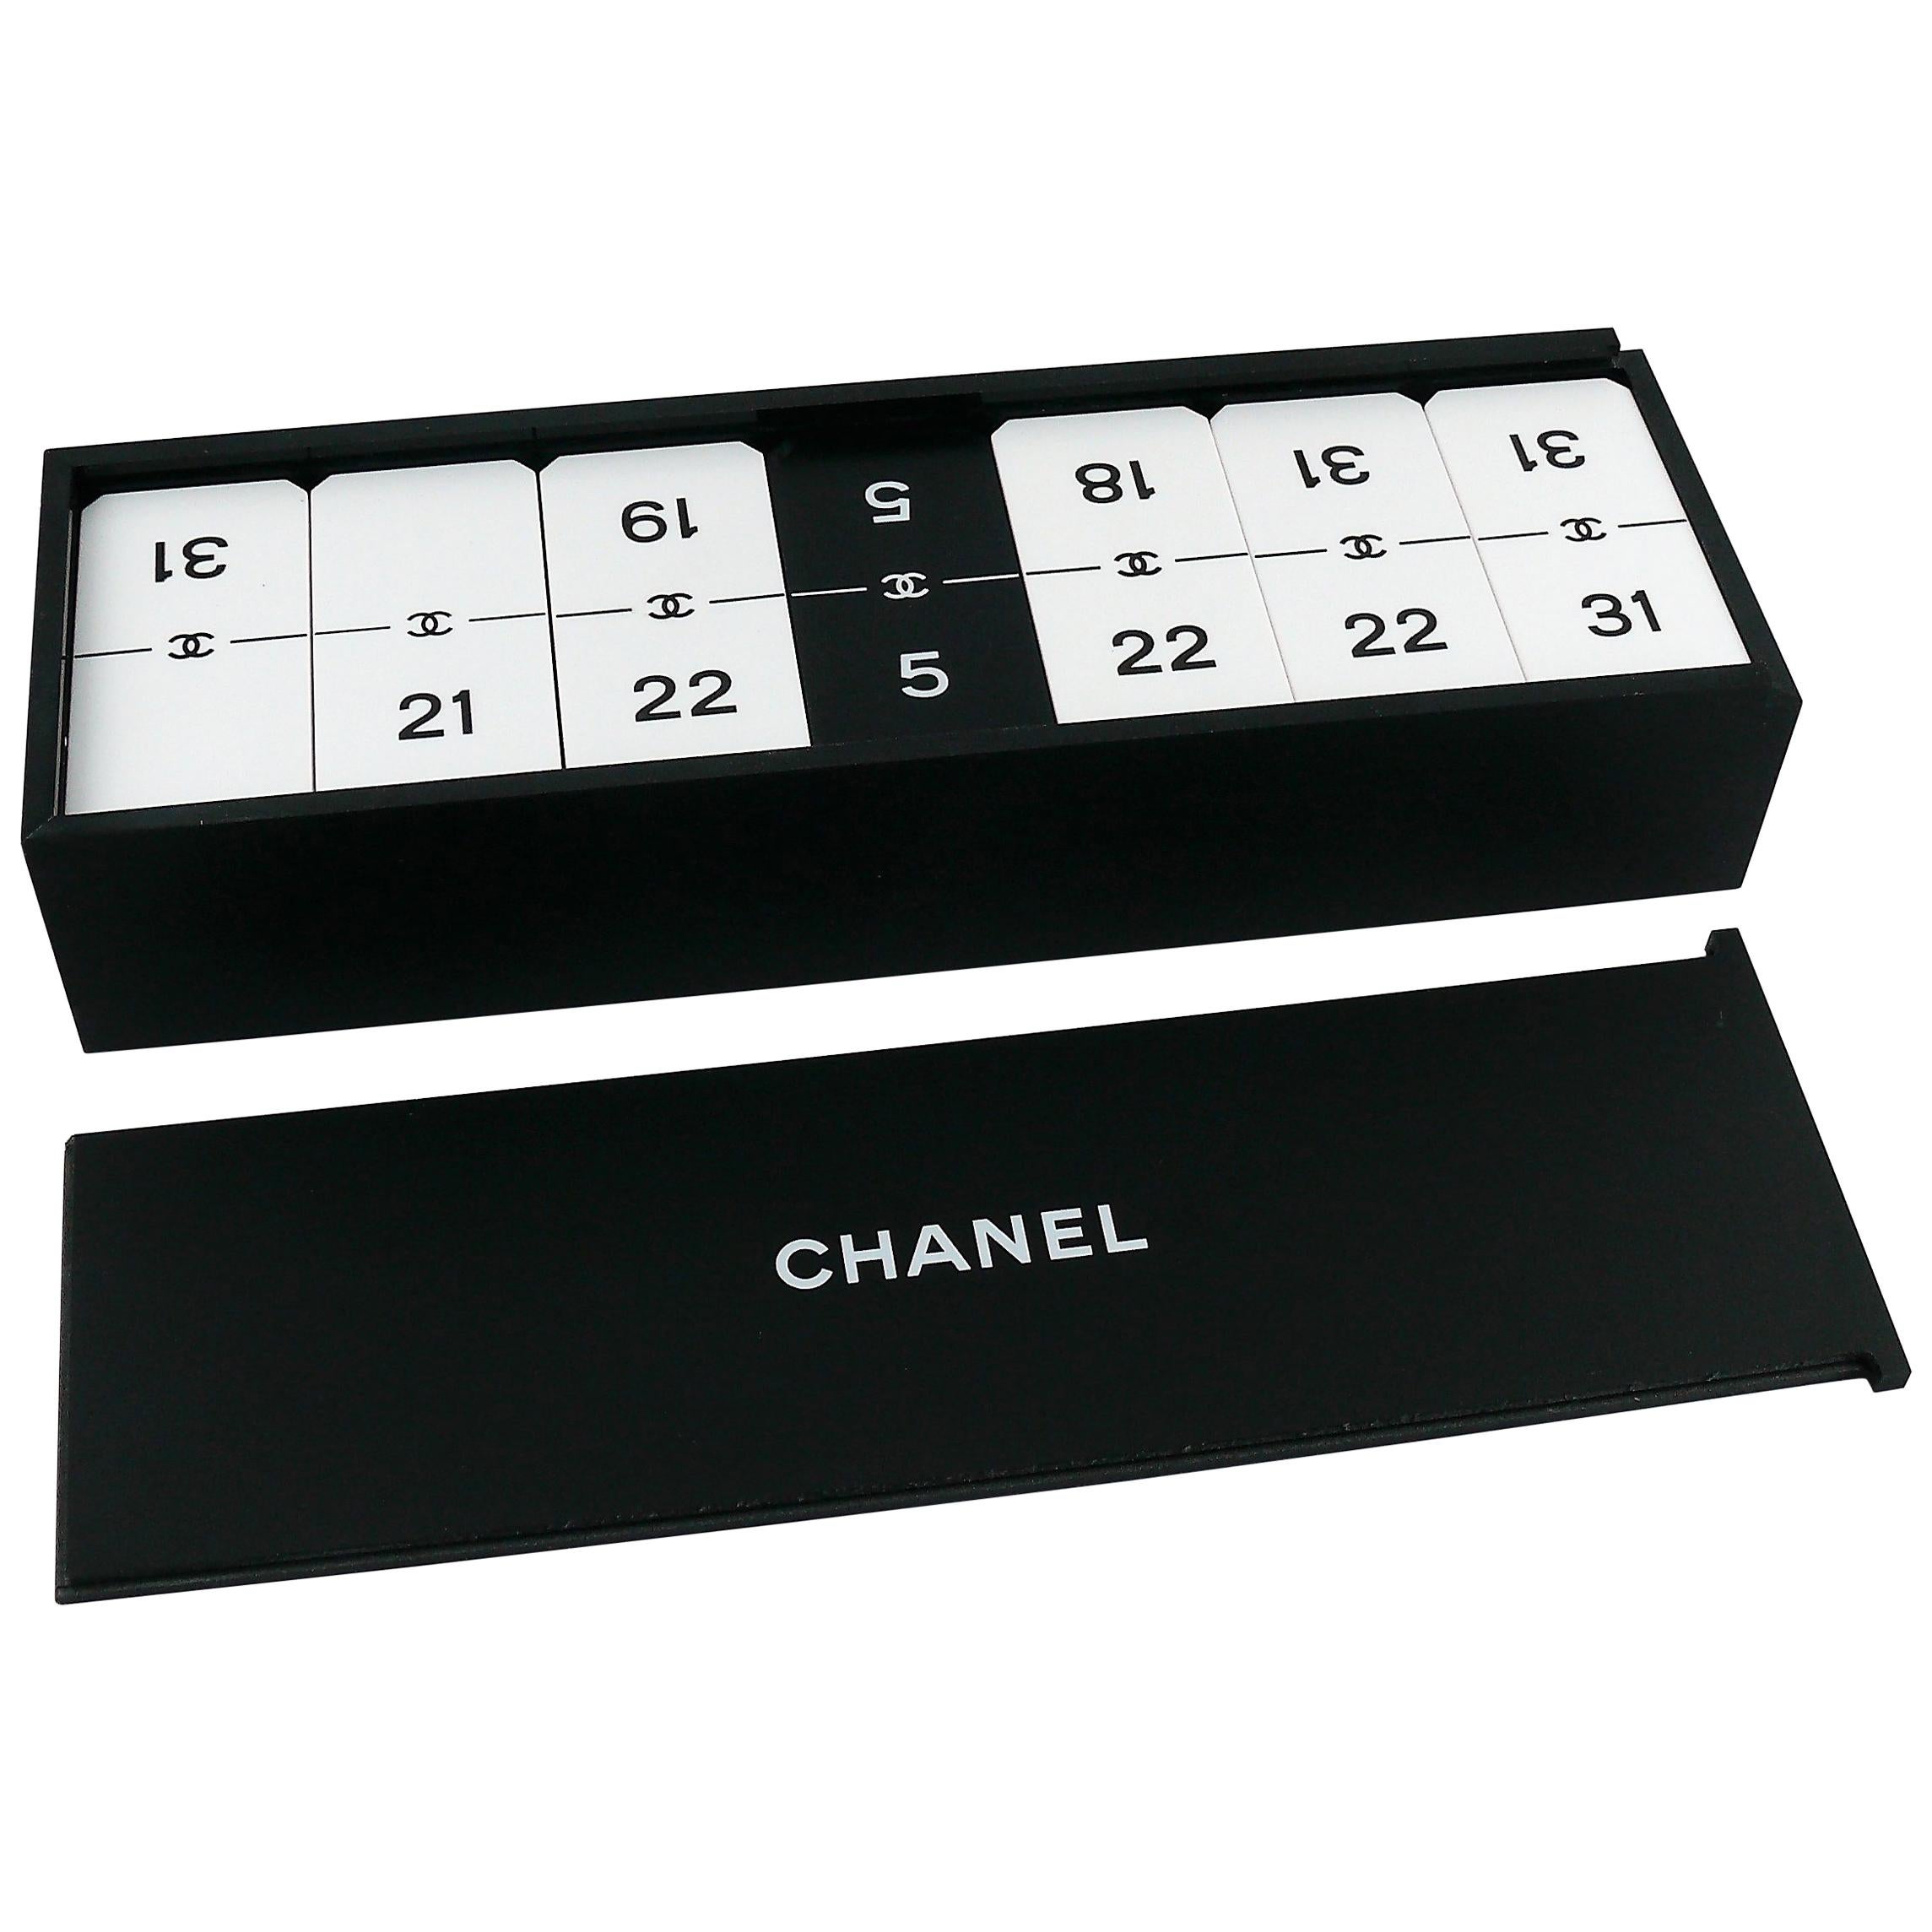 Chanel Domino Deck Set